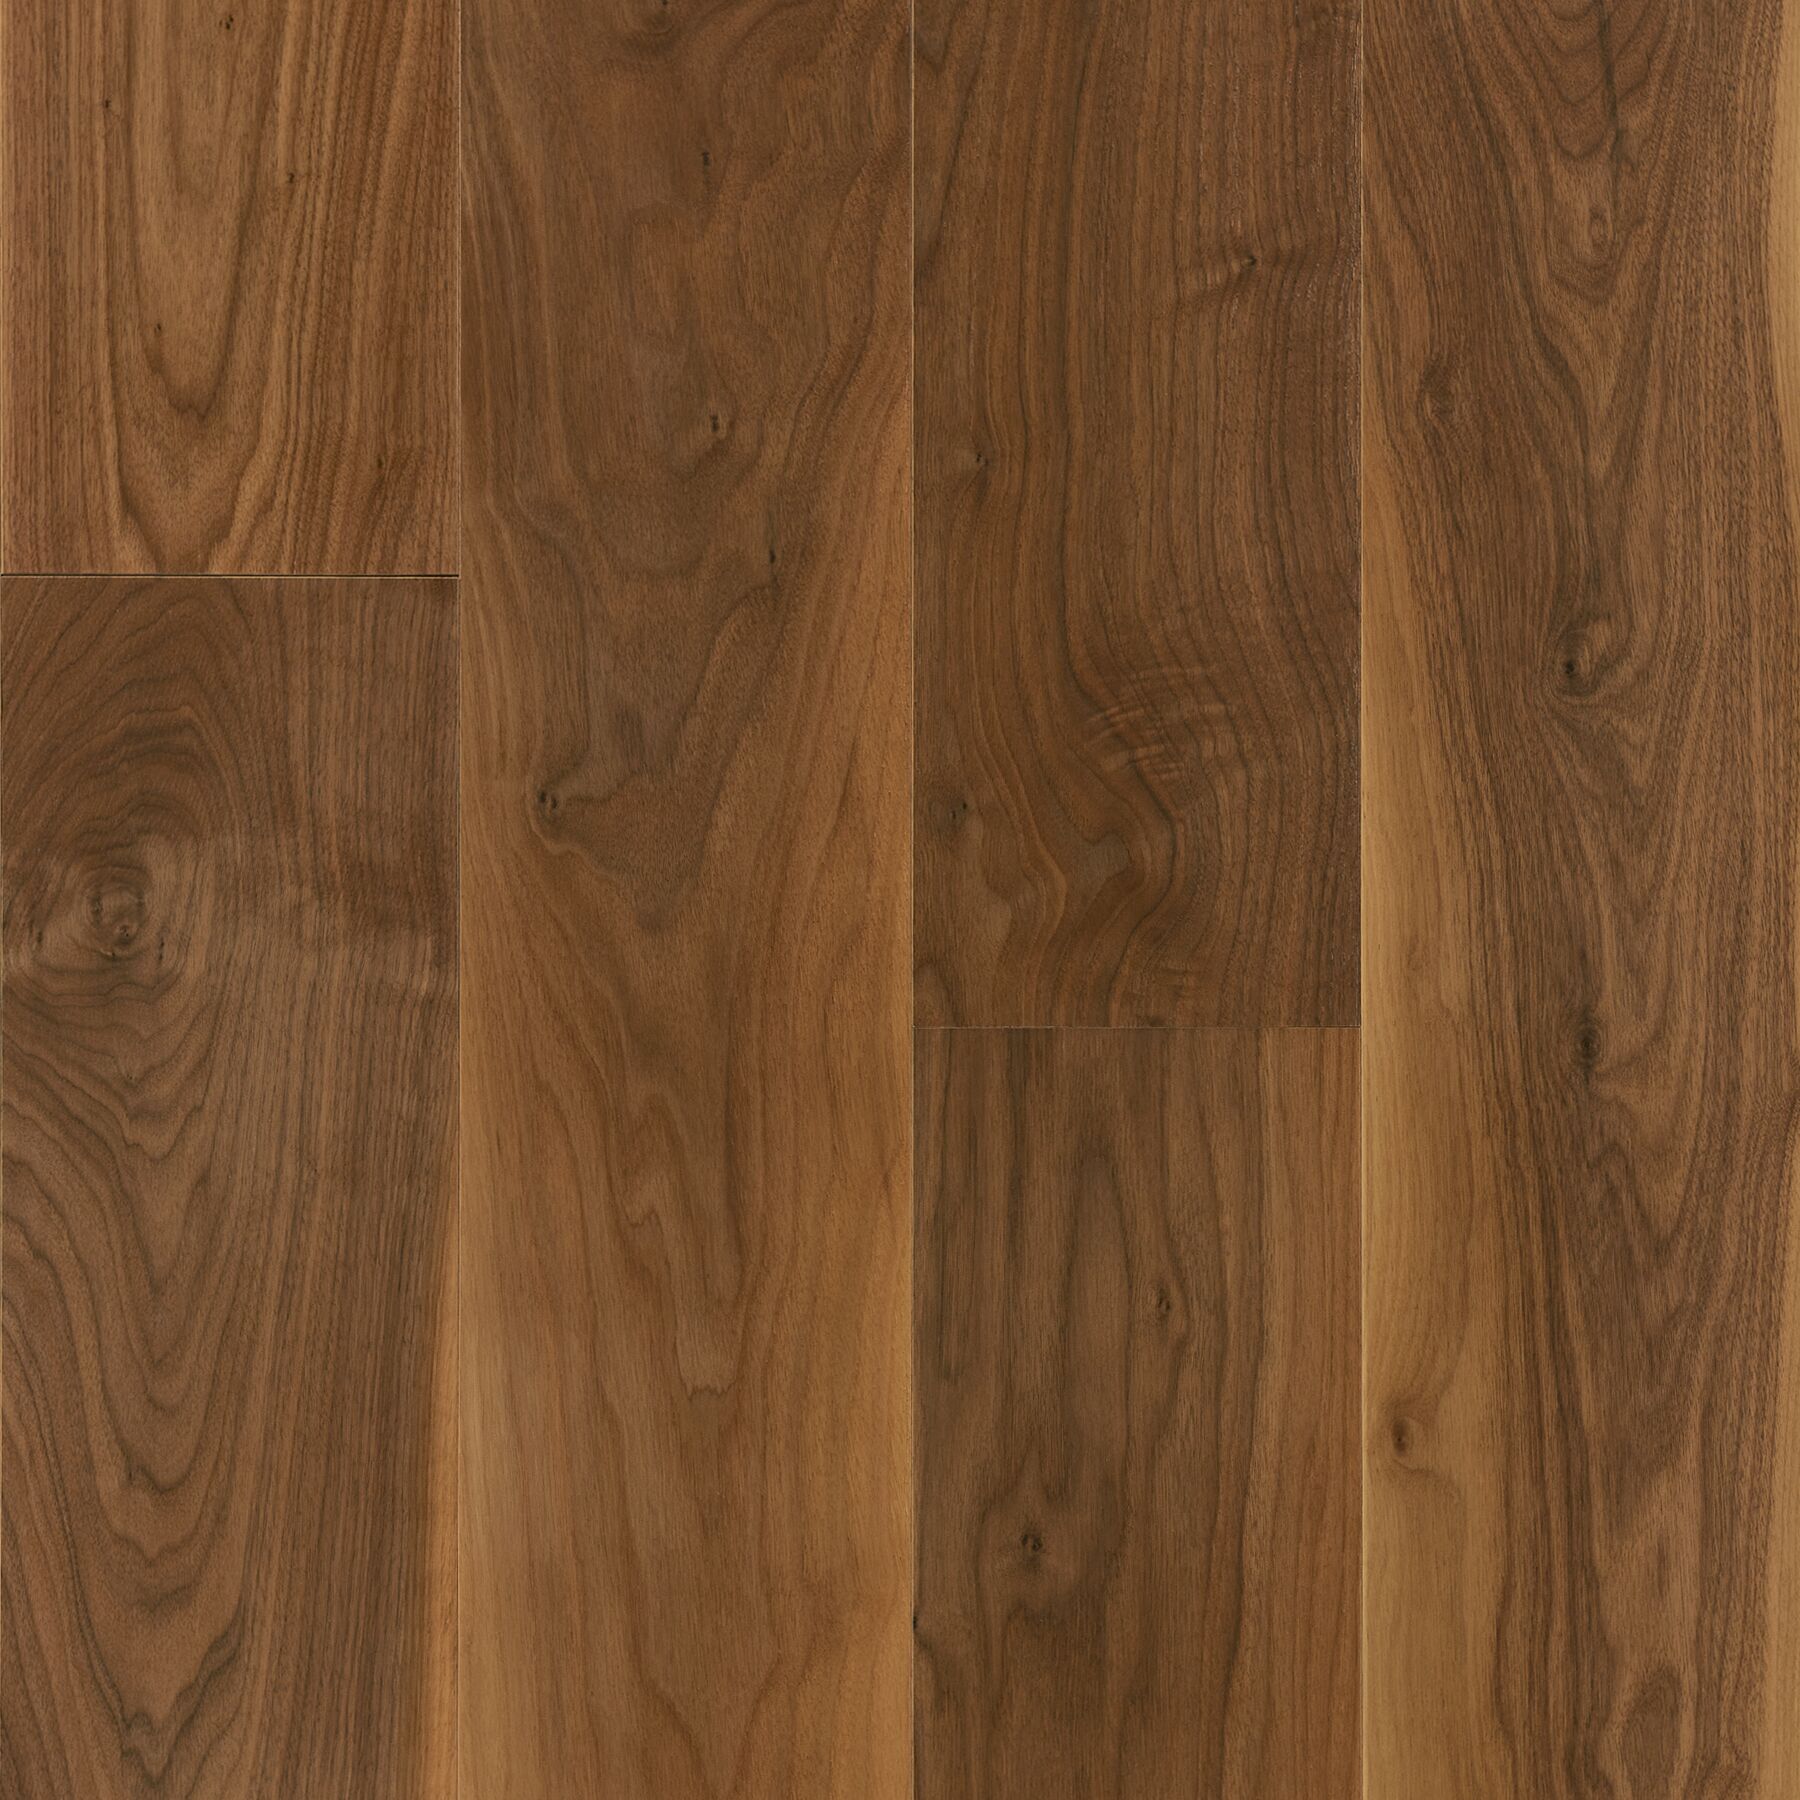 Bassett Dogwood Densified Wood Flooring with hardened wood for dog friendly hardwood flooring